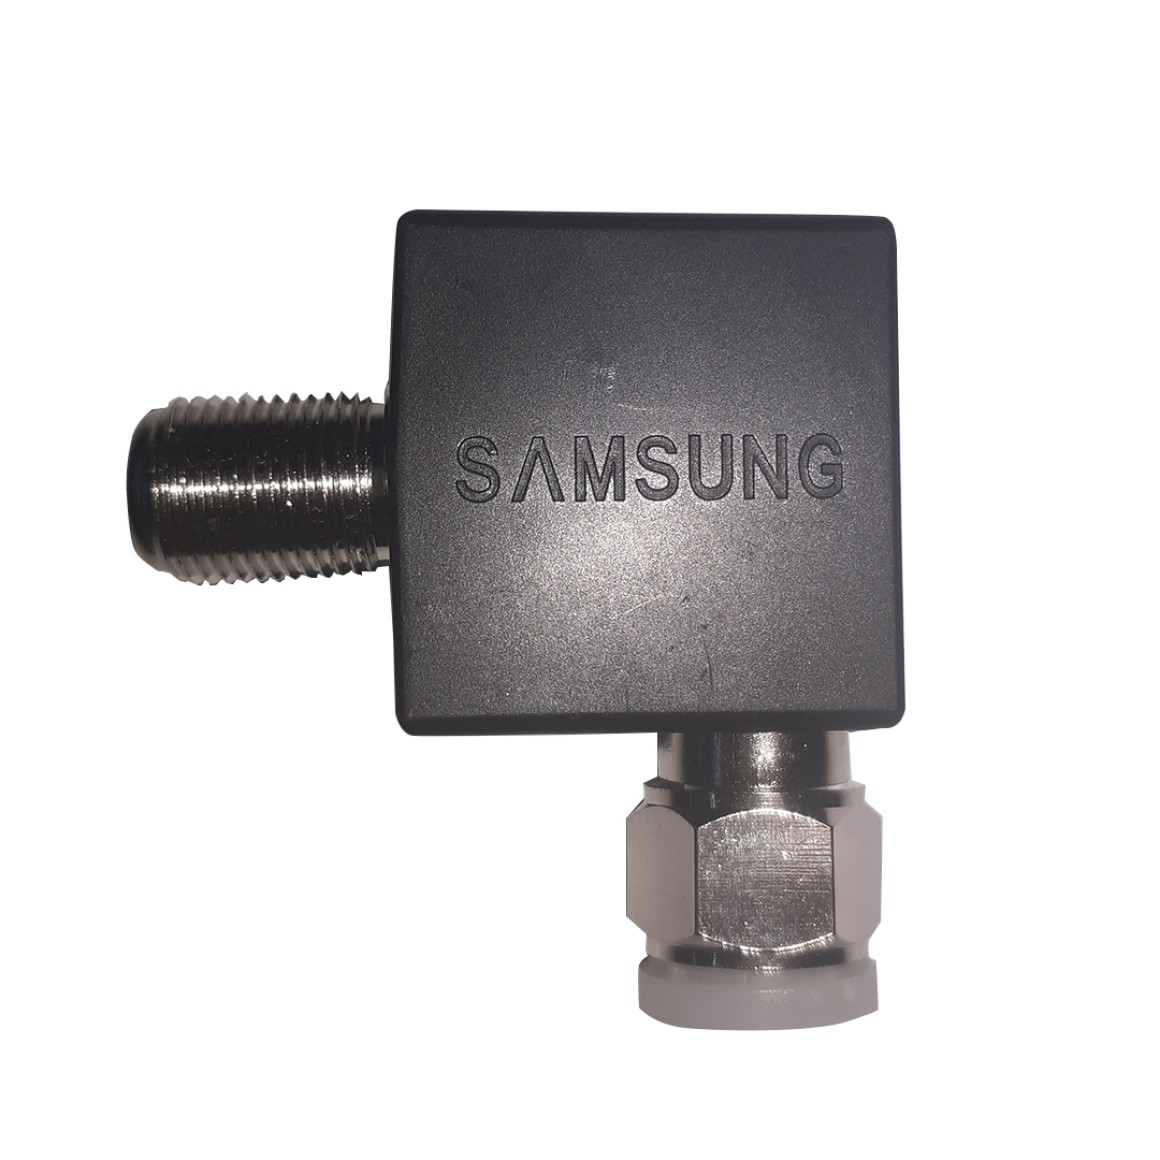 Samsung tv adapter filter (Adaptador de Antena Samsung) 